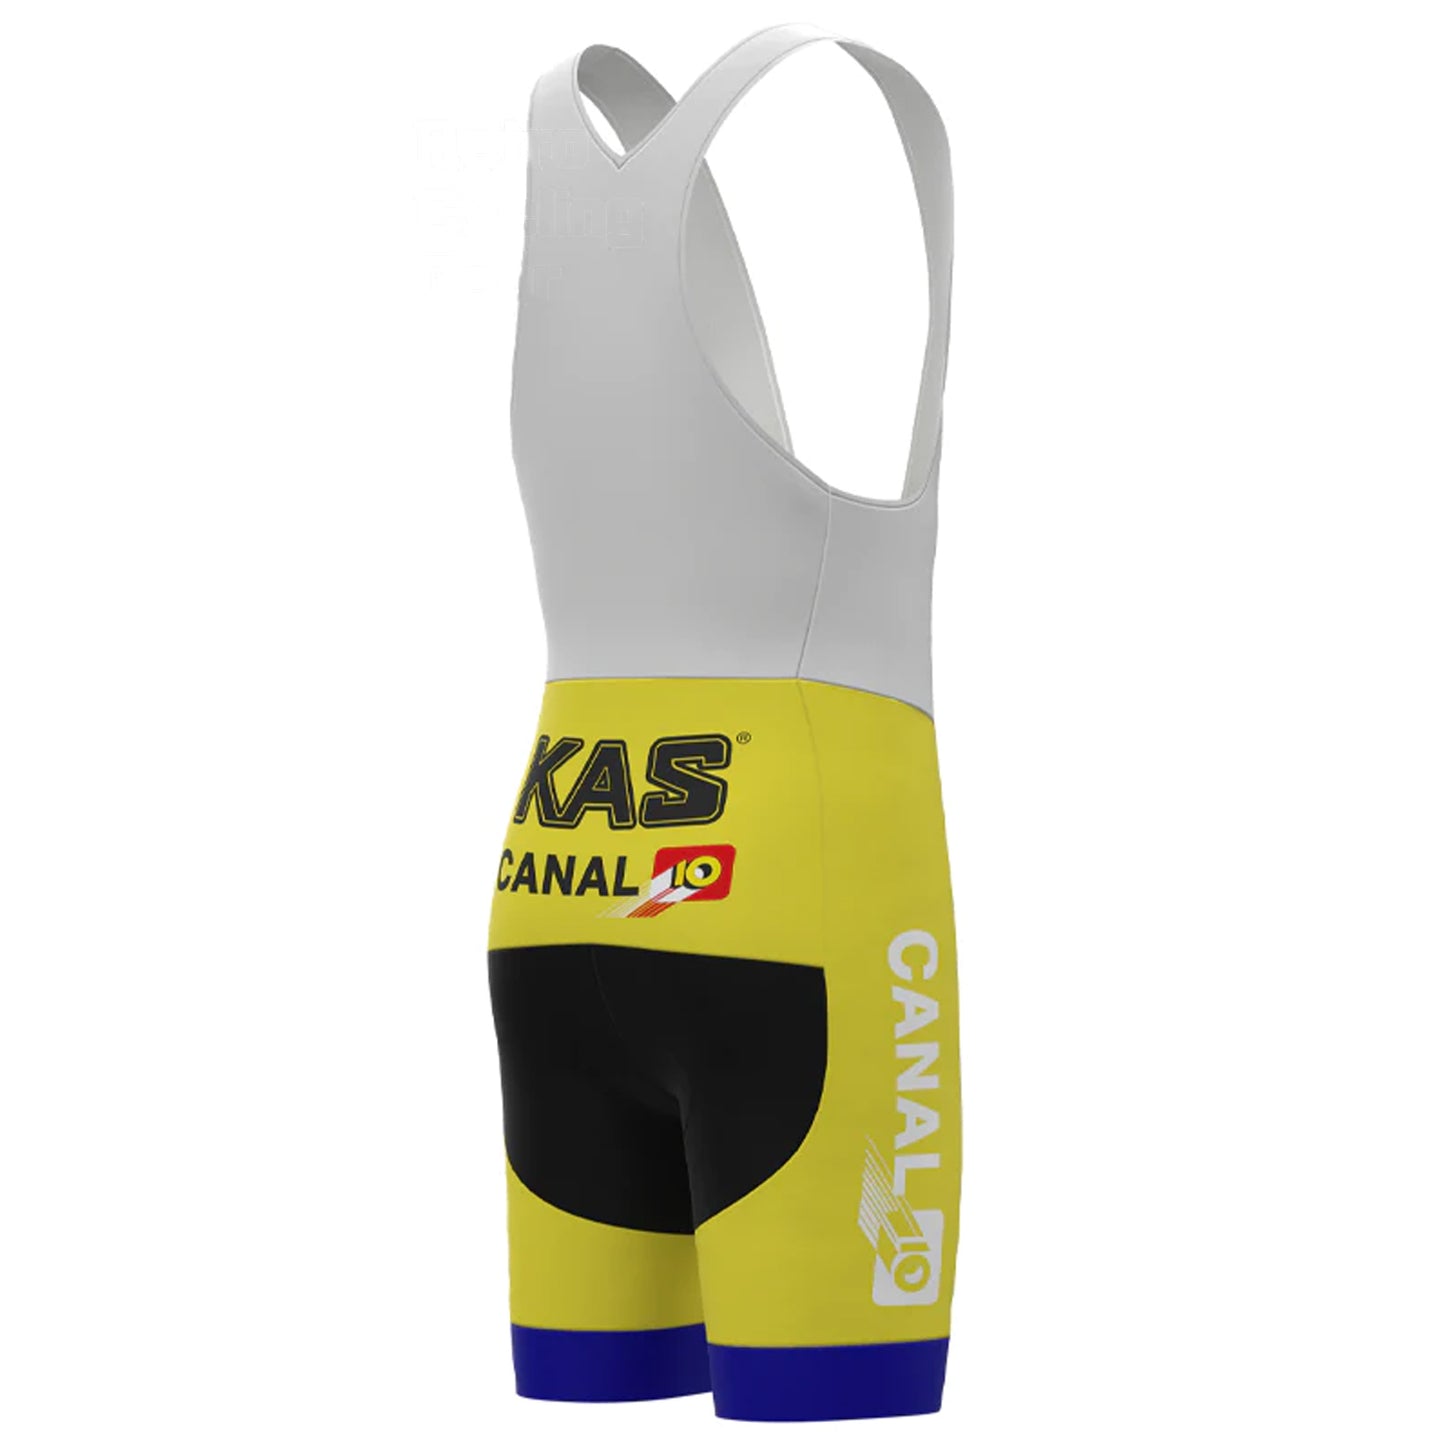 KAS Yellow Vintage Cycling Bib Shorts